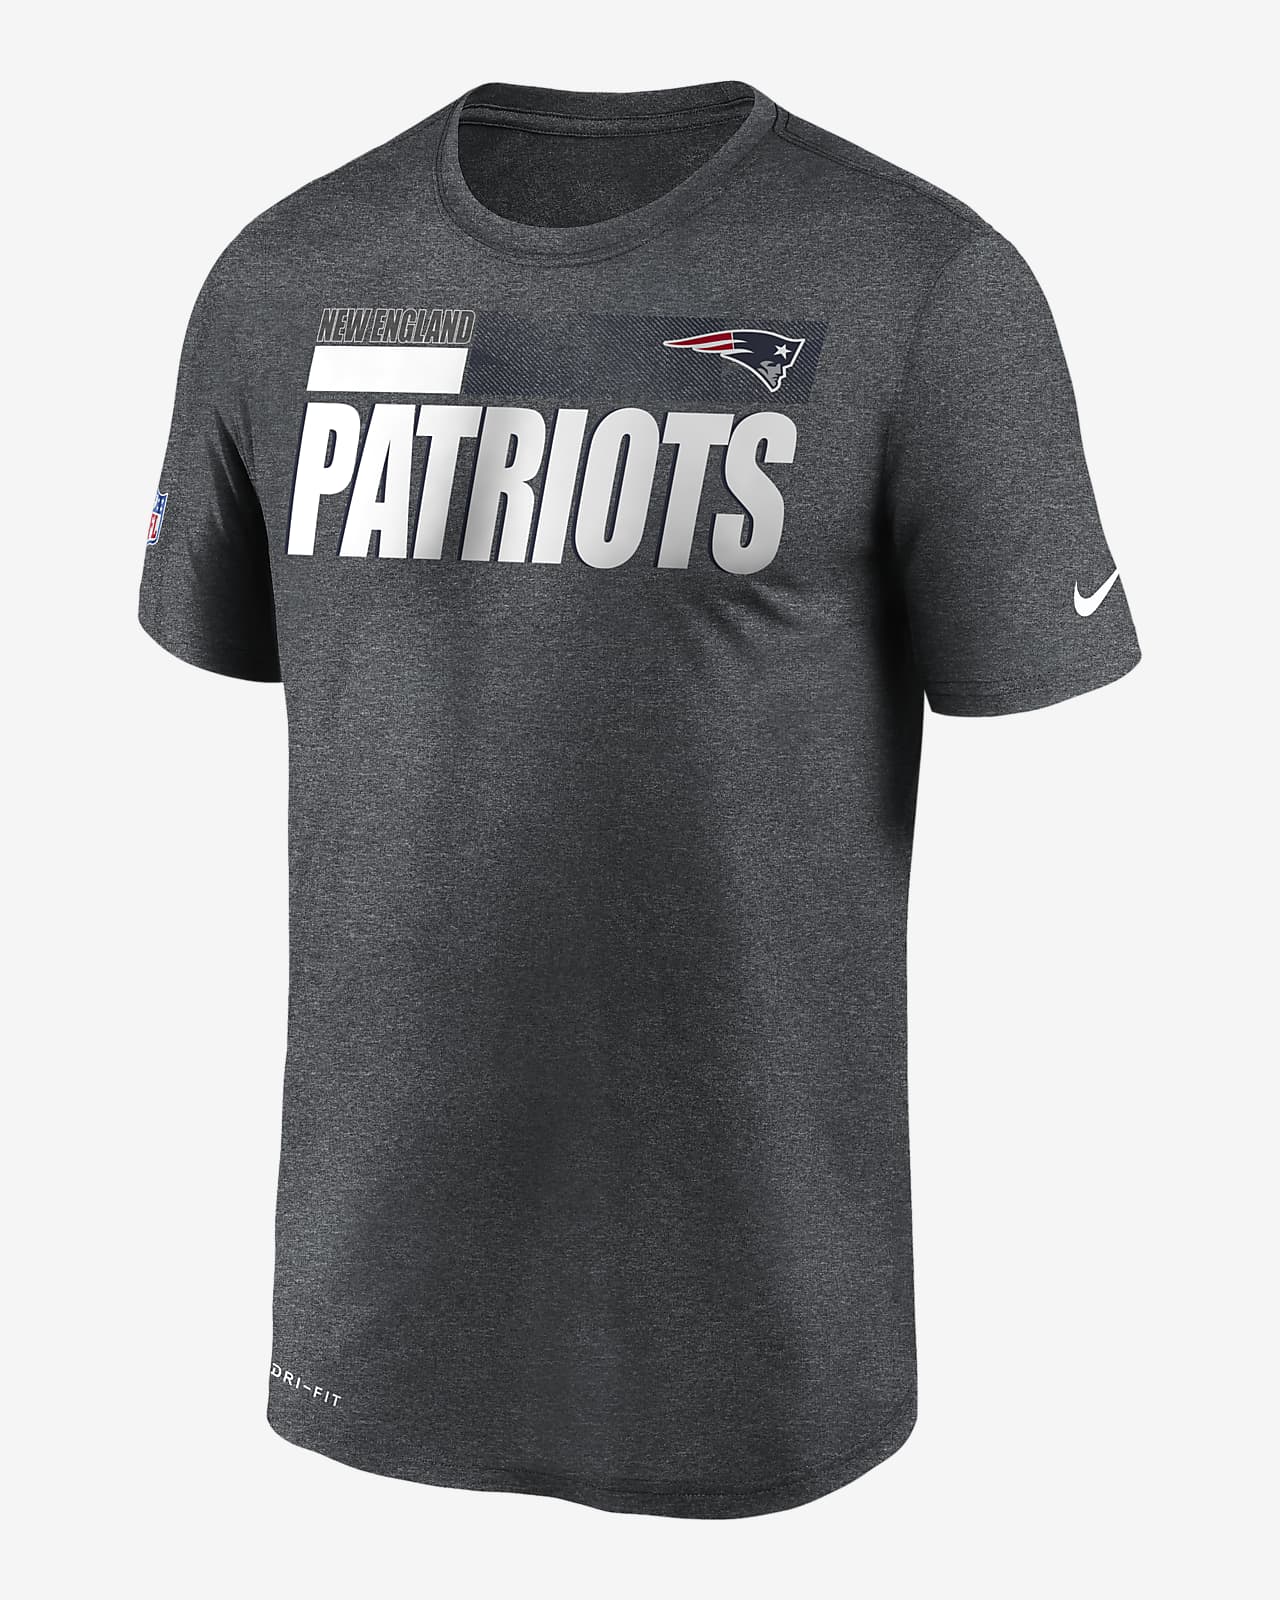 Tee-shirt Nike Legend Sideline (NFL Patriots) pour Homme